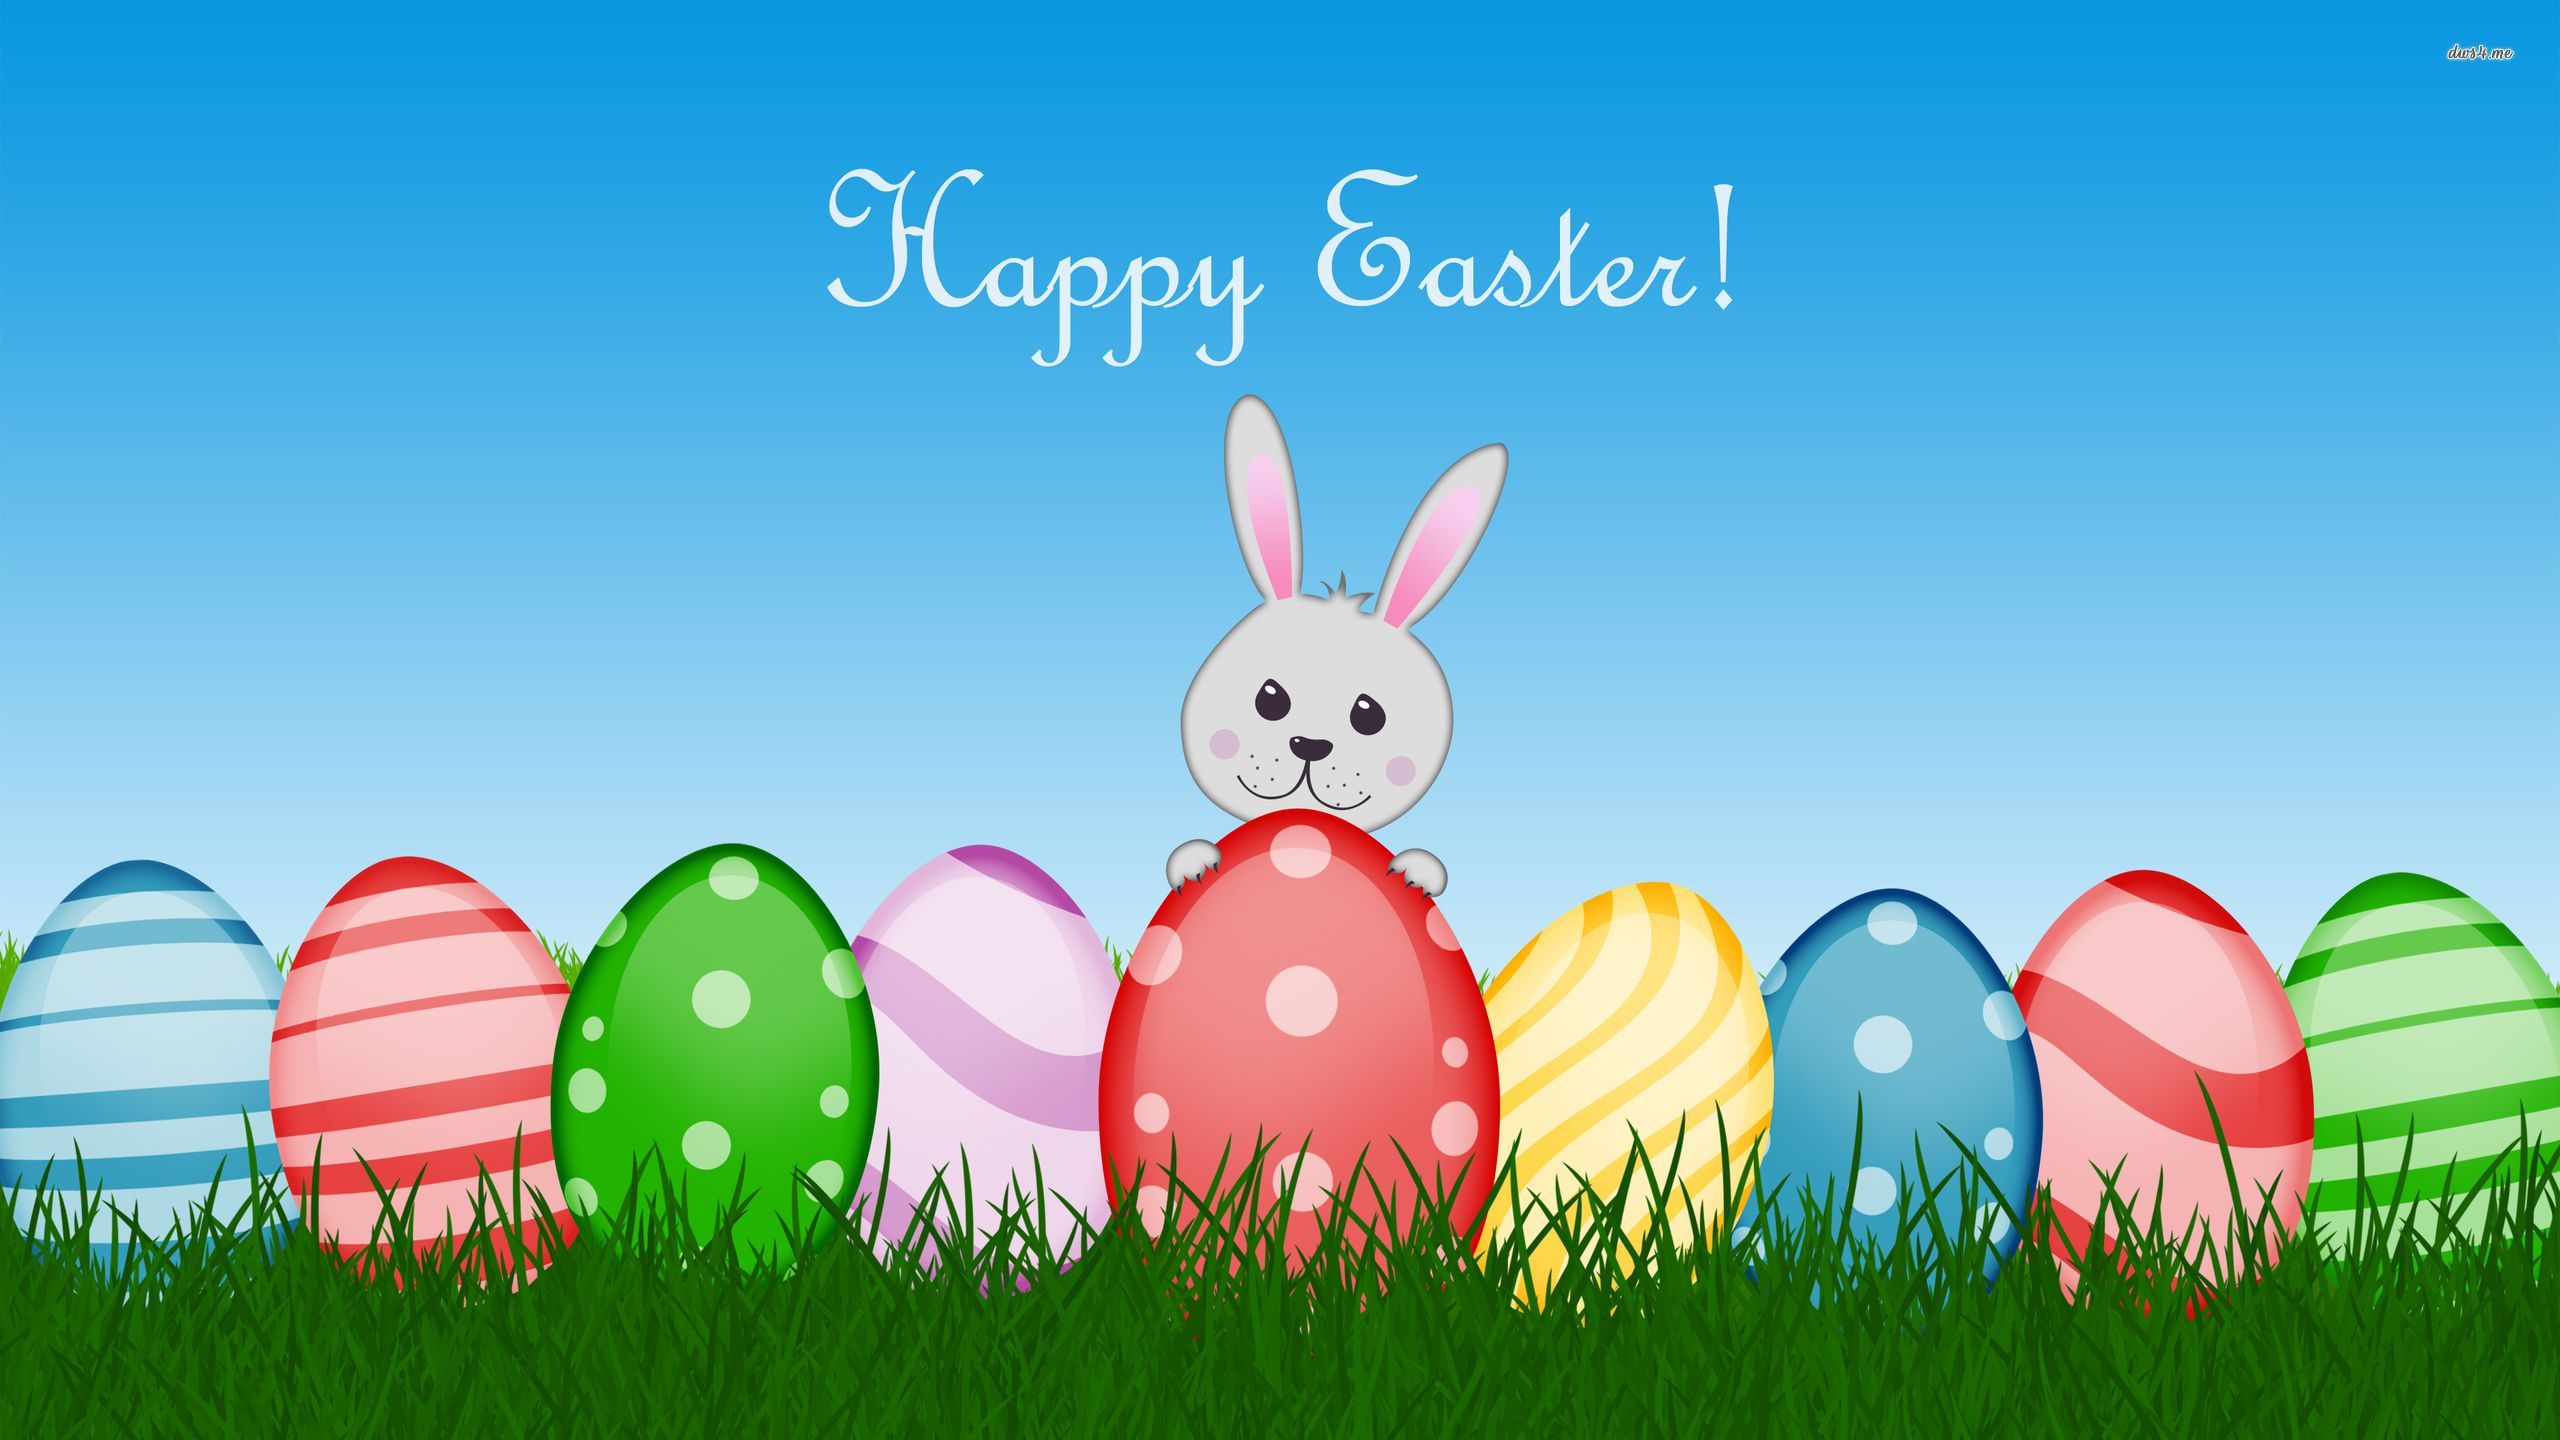 Easter Bunny Wallpaper Download. Happy easter wallpaper, Easter wallpaper, Easter bunny picture